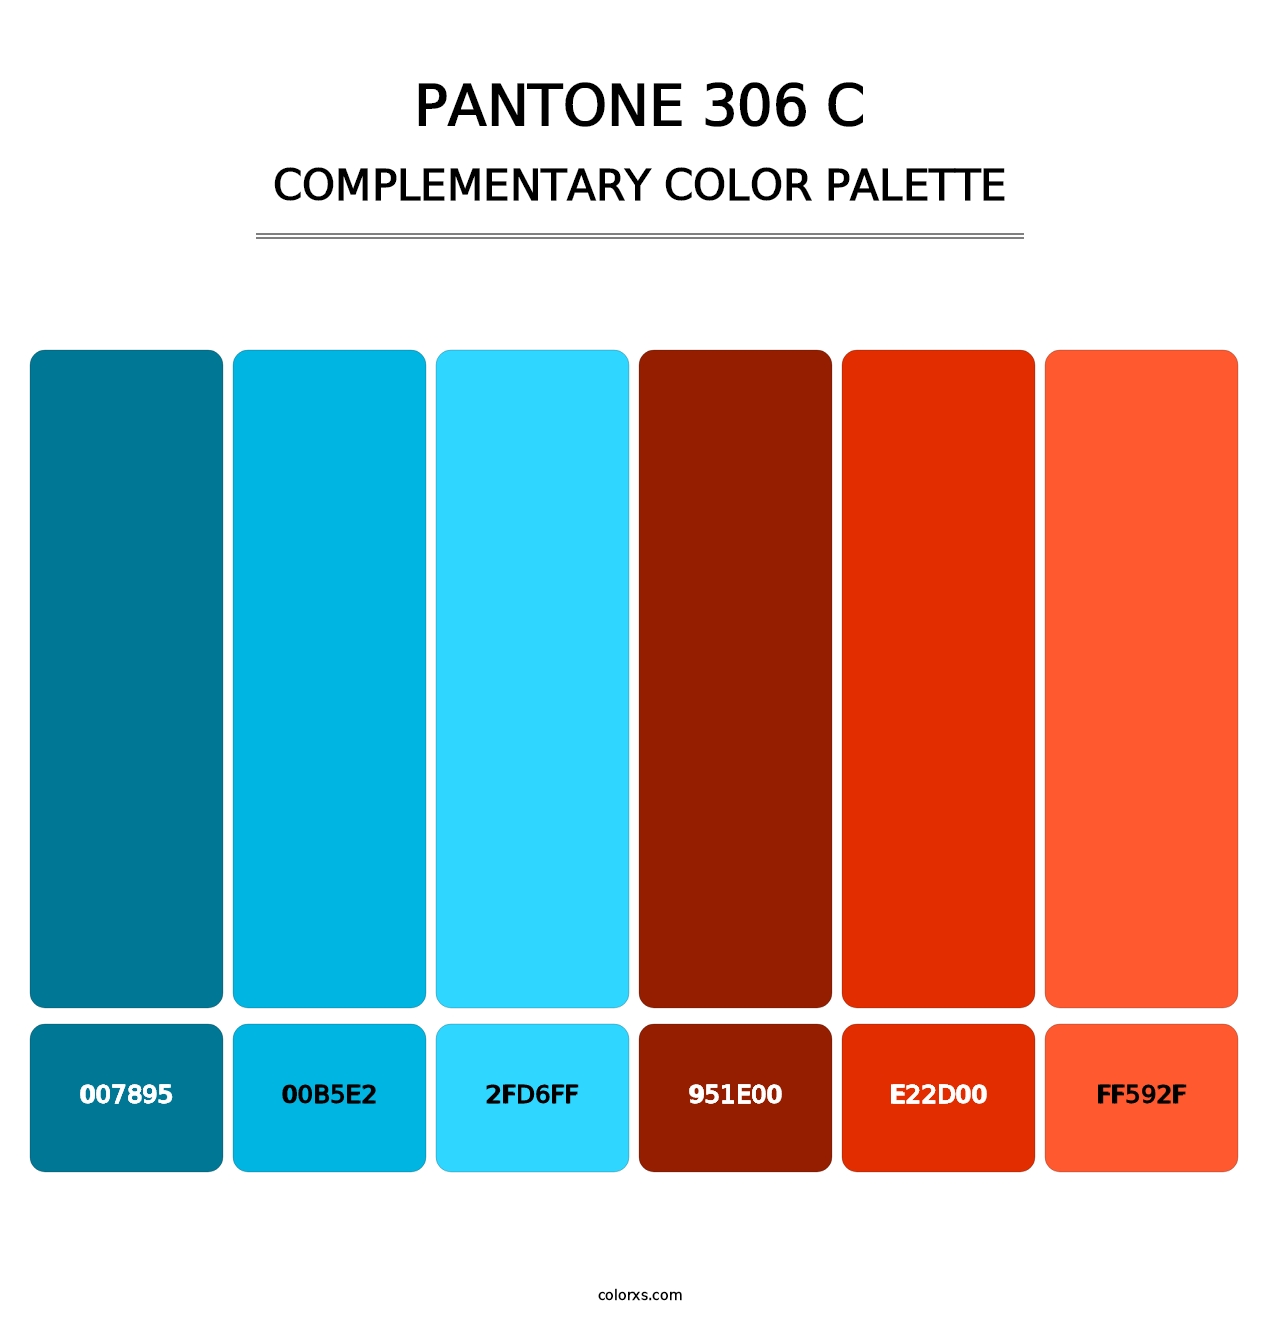 PANTONE 306 C - Complementary Color Palette